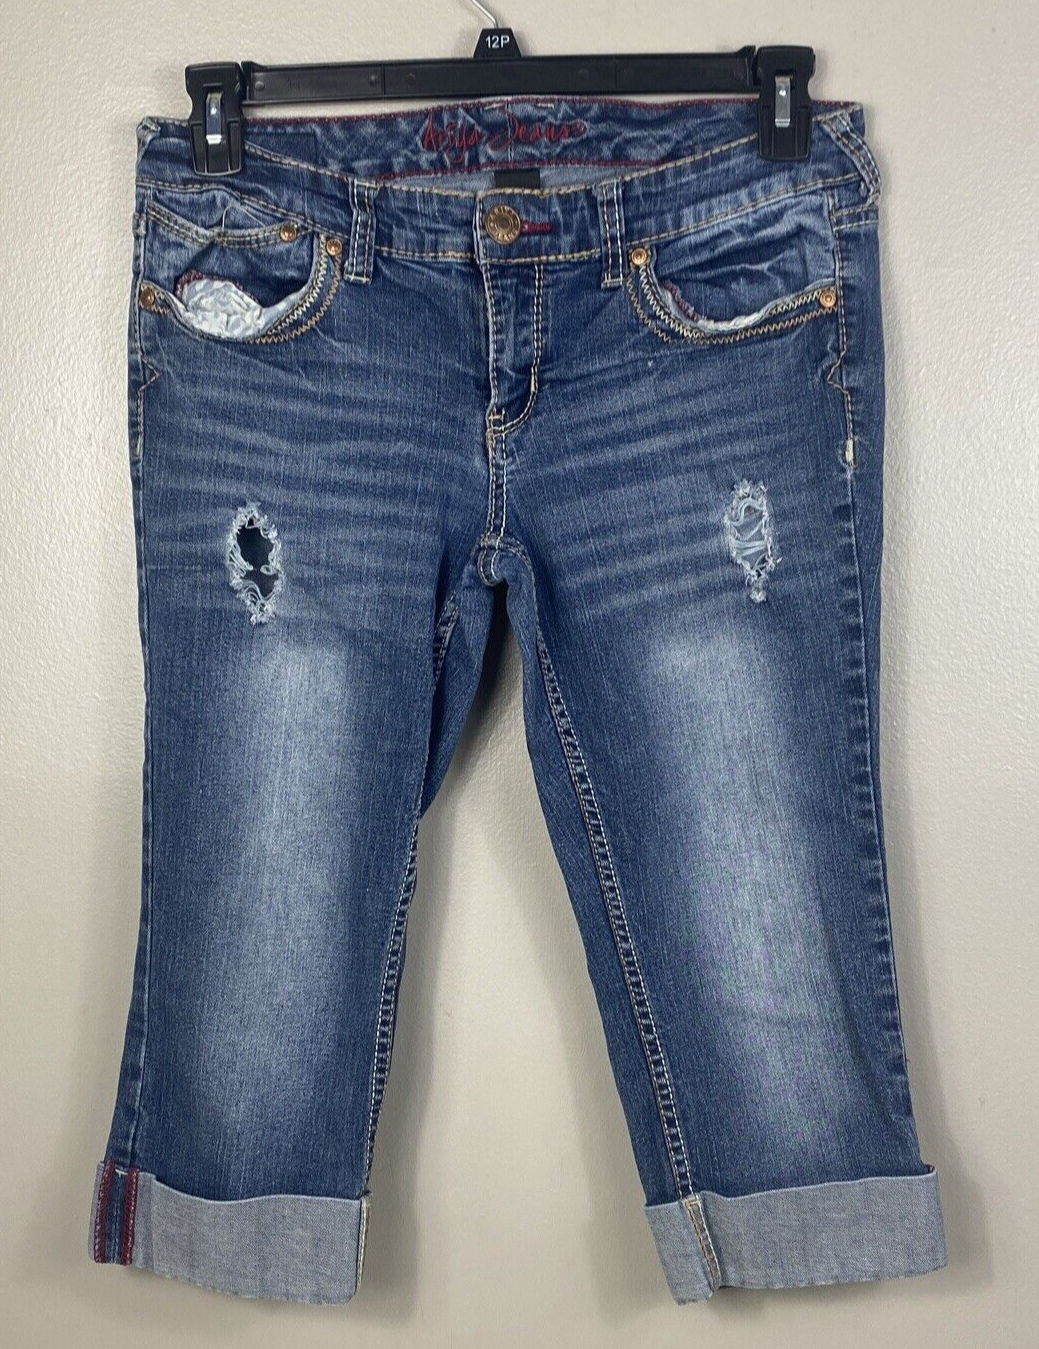 Primary image for Ariya Jeans Women's Size 11/12 Medium Wash Denim Shorts/Jeans